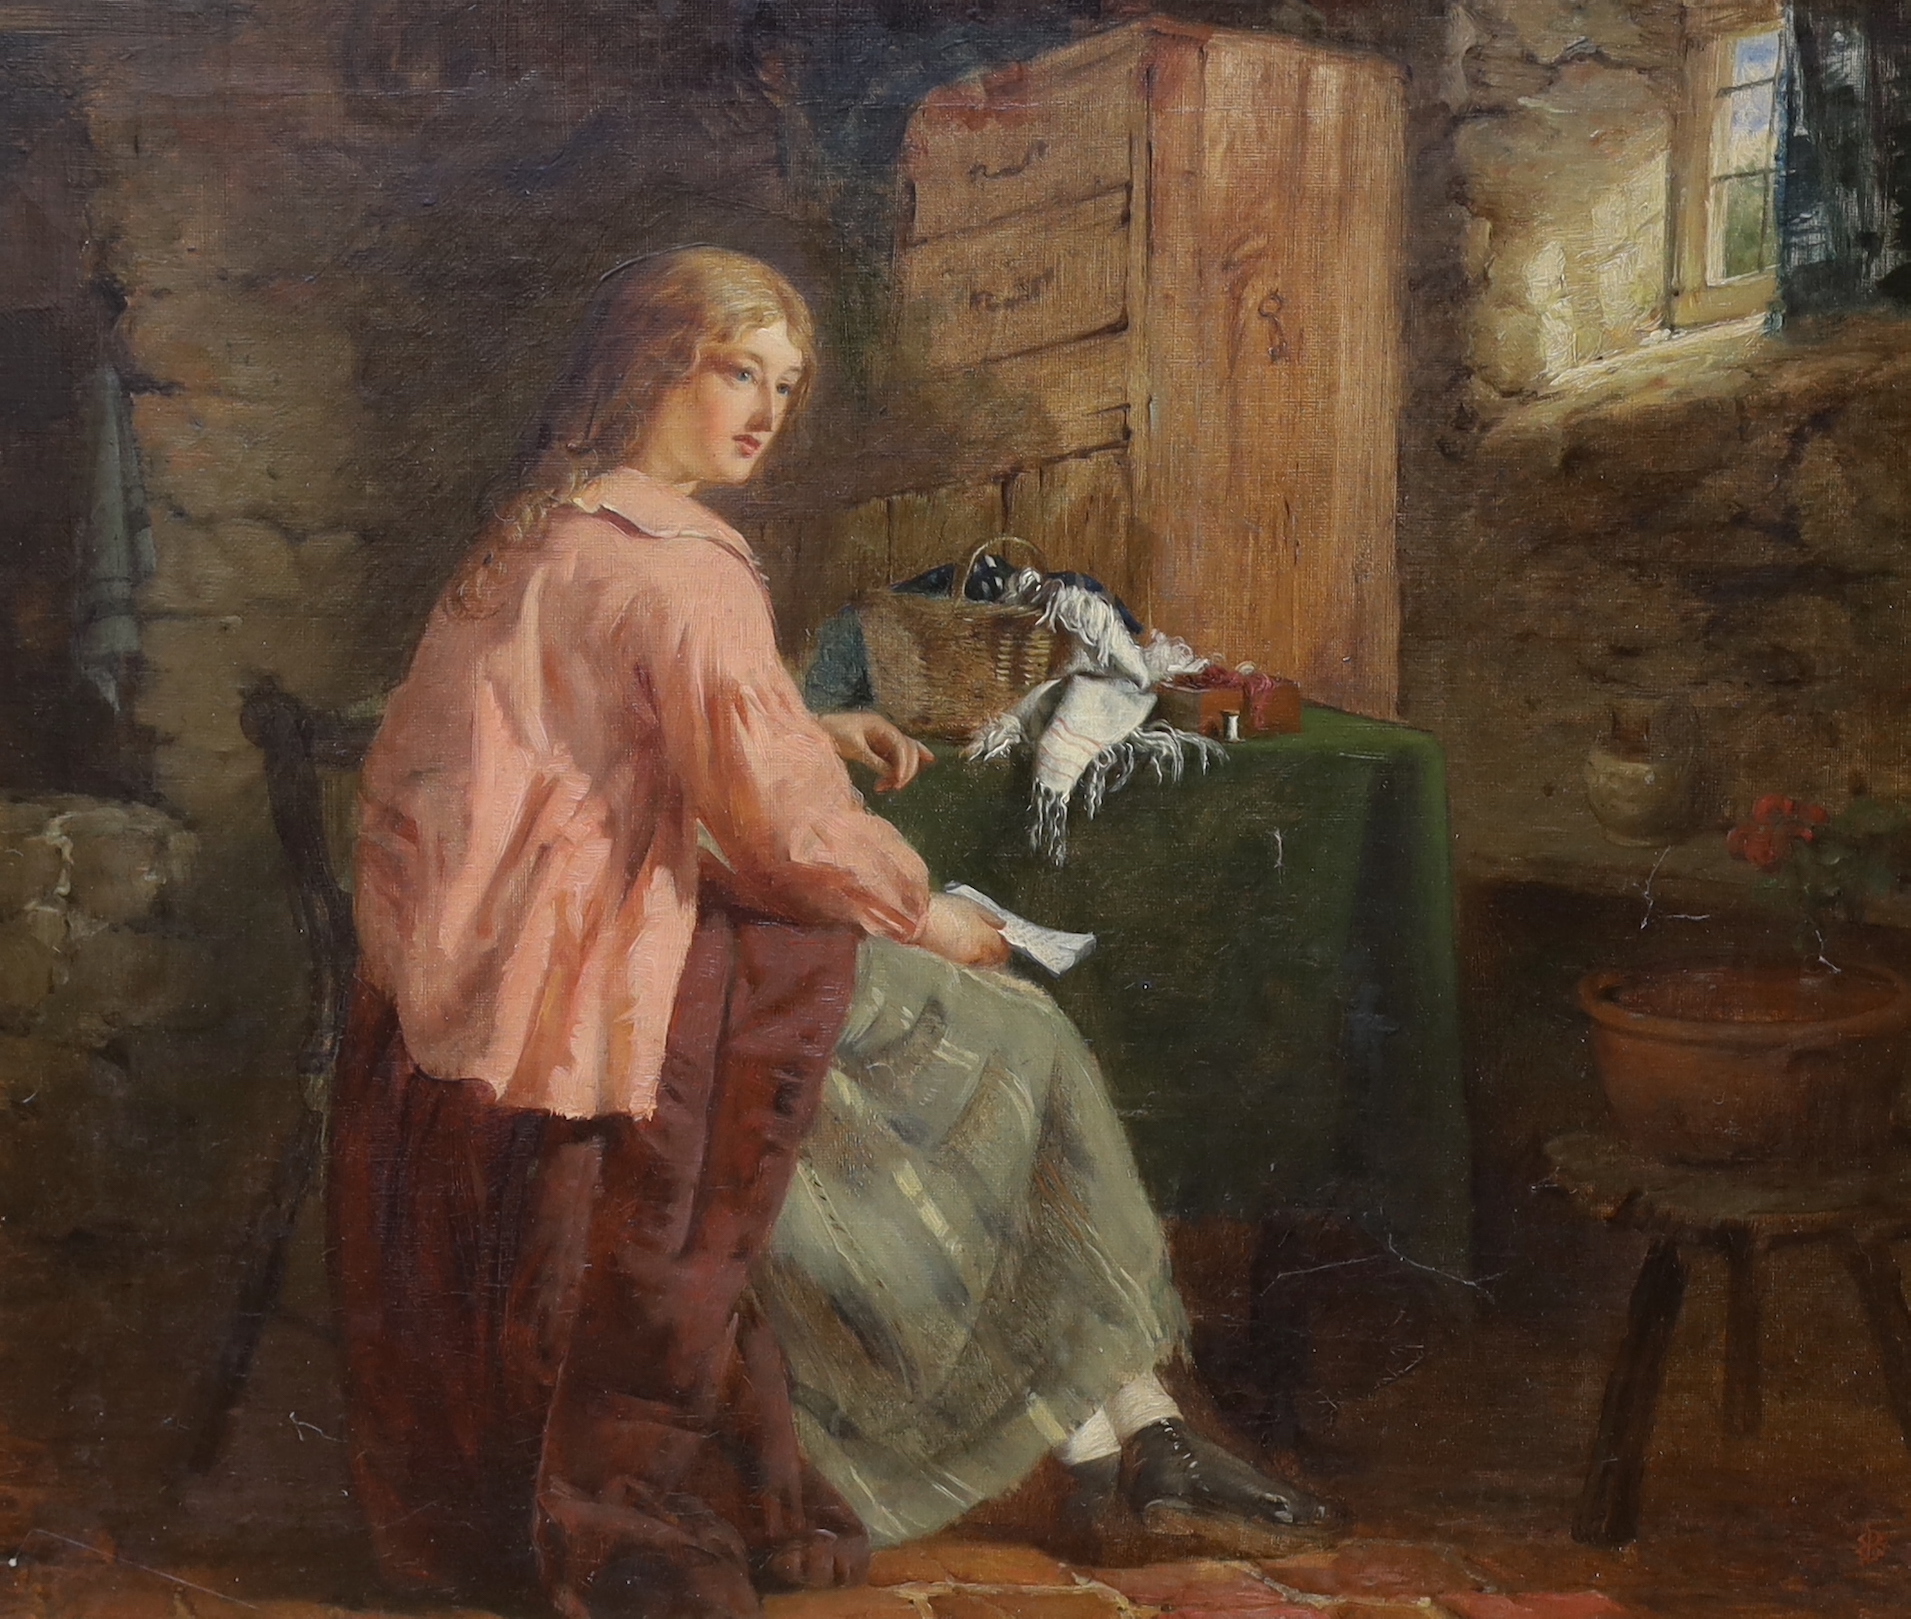 Edward Charles Barnes (1830-1890), oil on canvas, Seated lady in an interior, ornate gilt frame, 39cm x 32cm